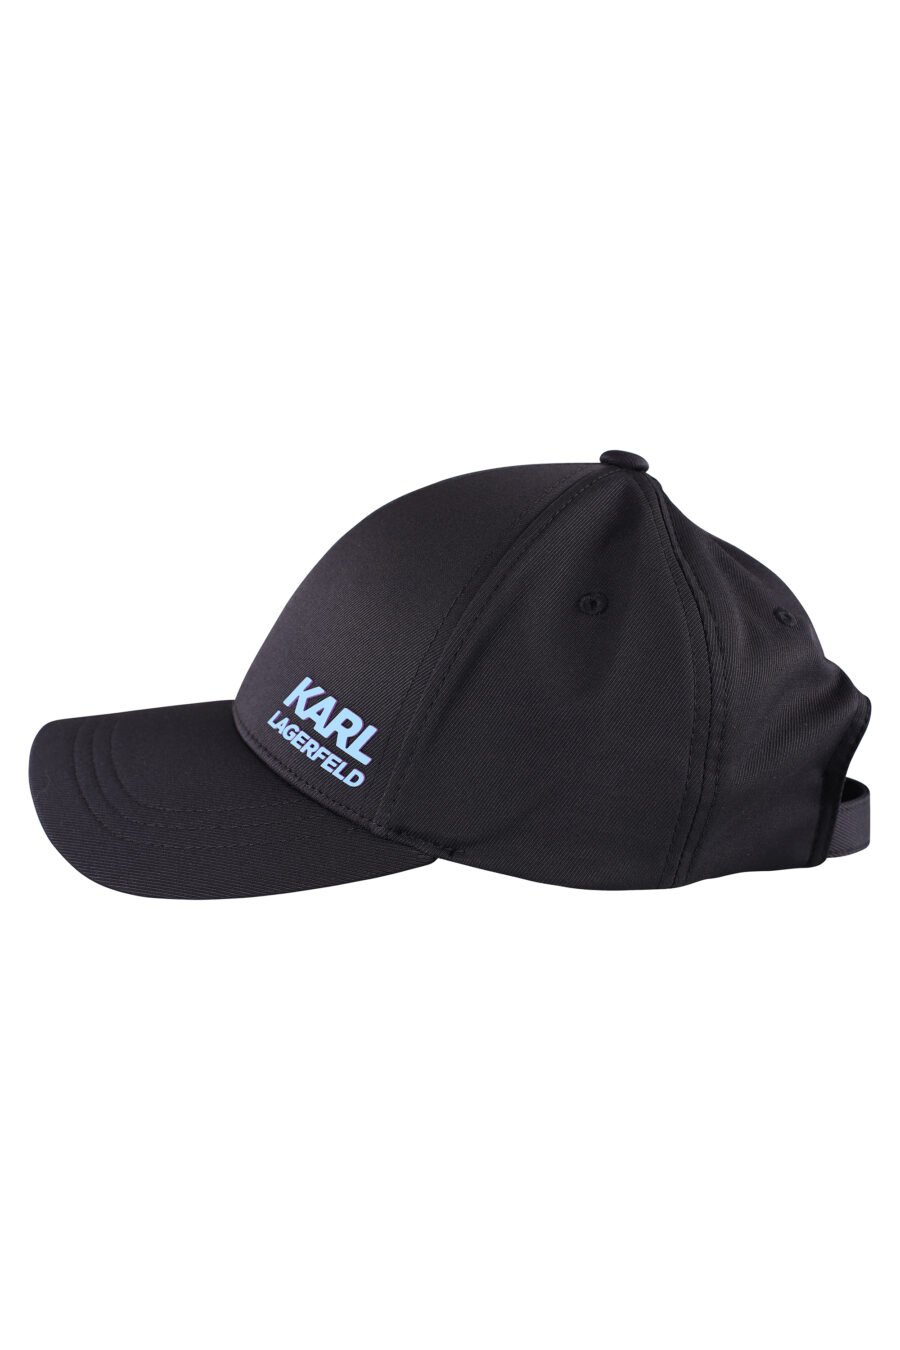 Schwarze Kappe mit himmelblauem Logo - IMG 8528